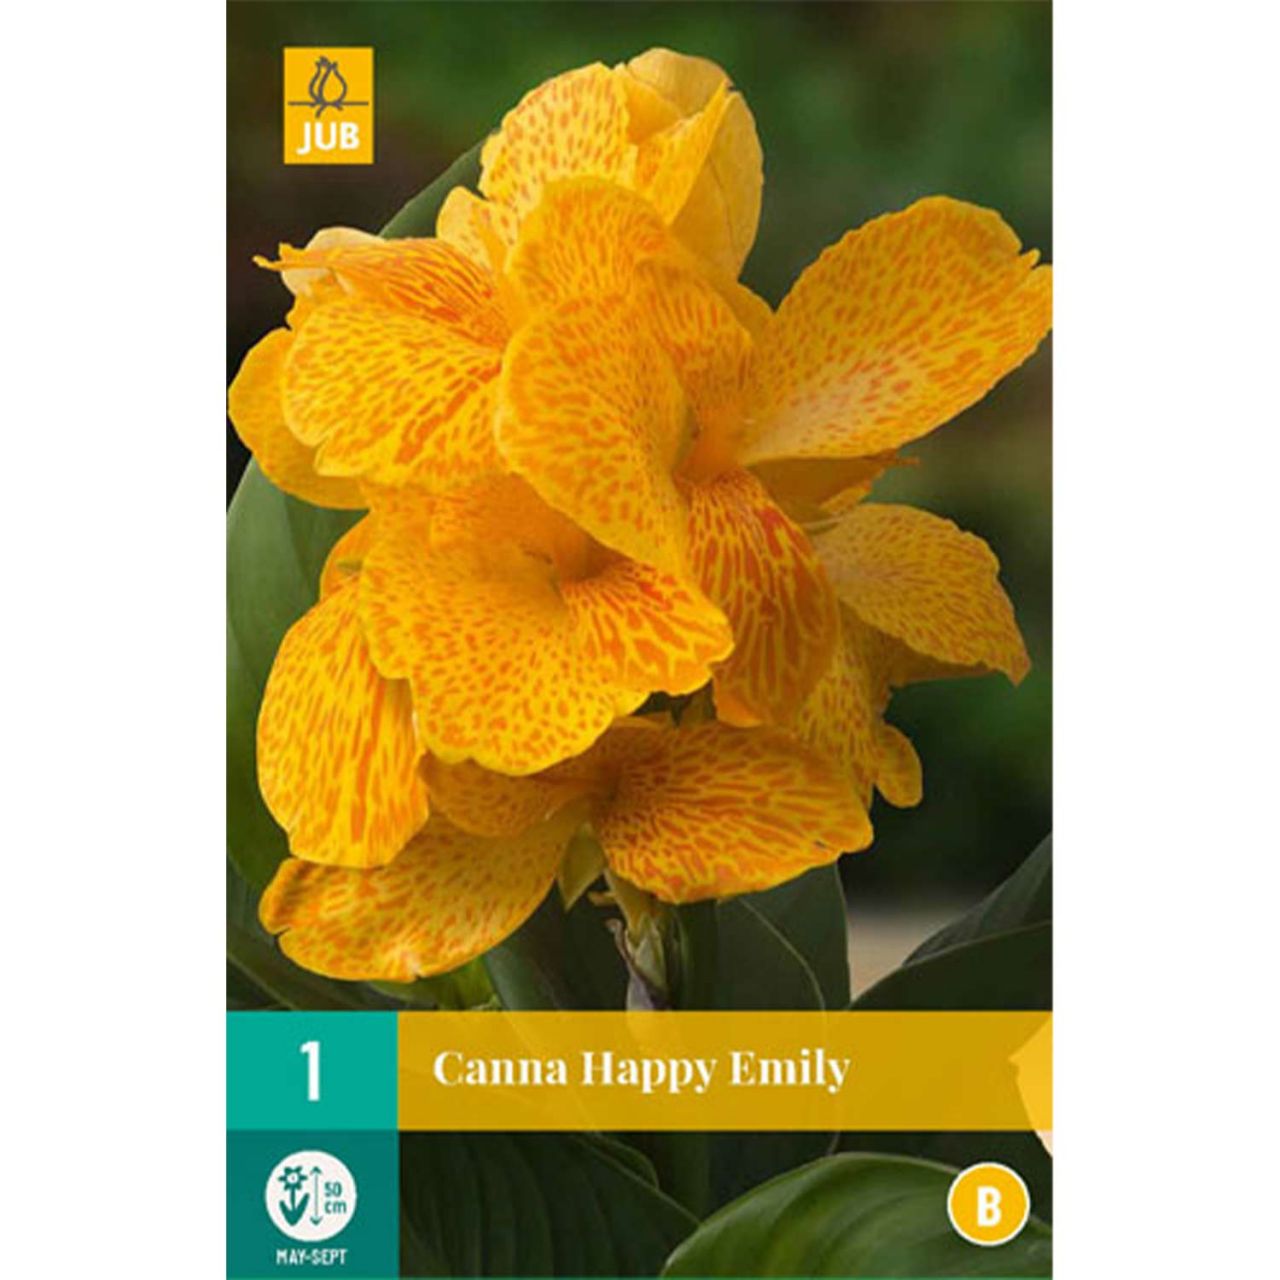 Kategorie <b>Frühlings-Blumenzwiebeln </b> - Zwerg-Canna 'Happy Emily' - 1 Stück - Canna indica